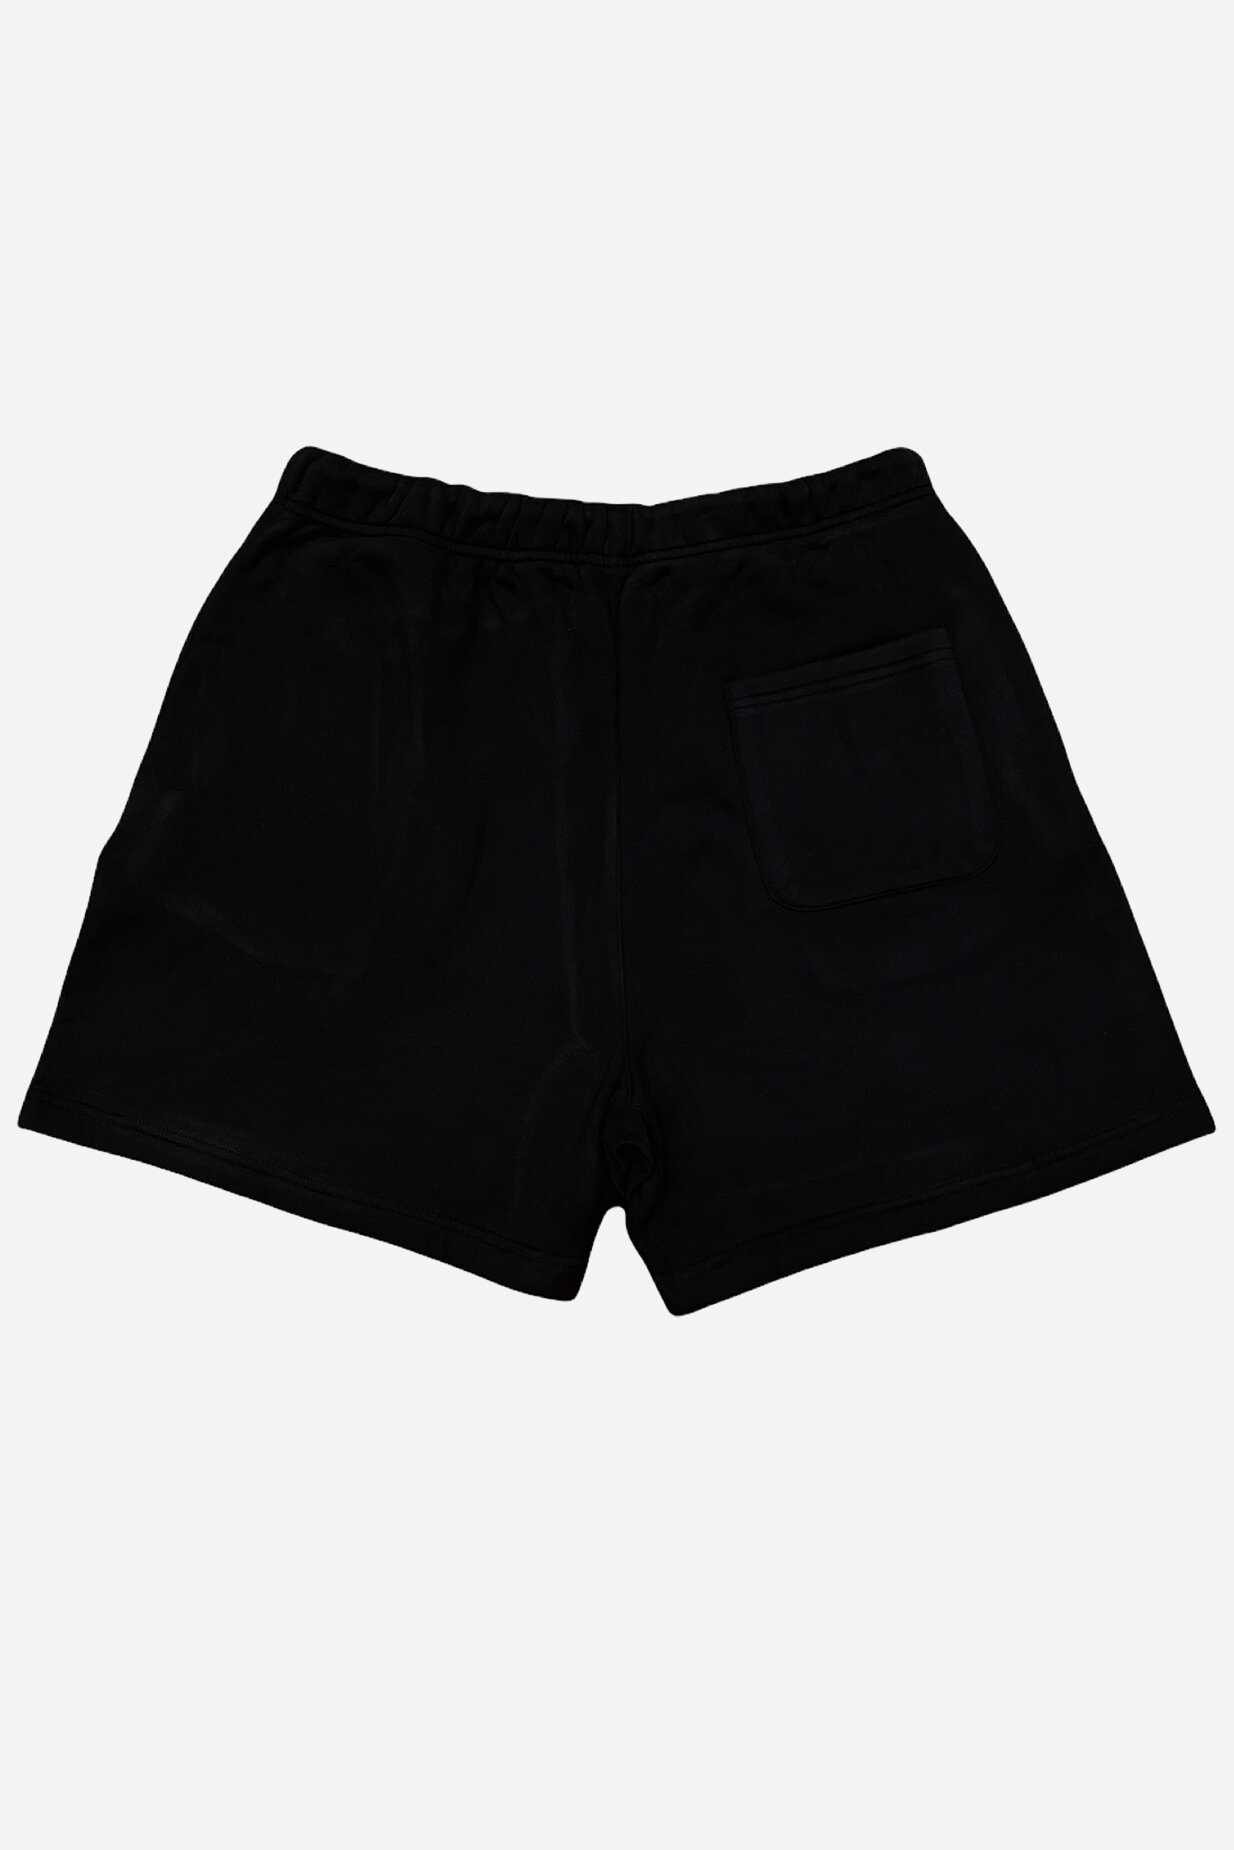 VHTS Cotton fleece lounge shorts | VHTS